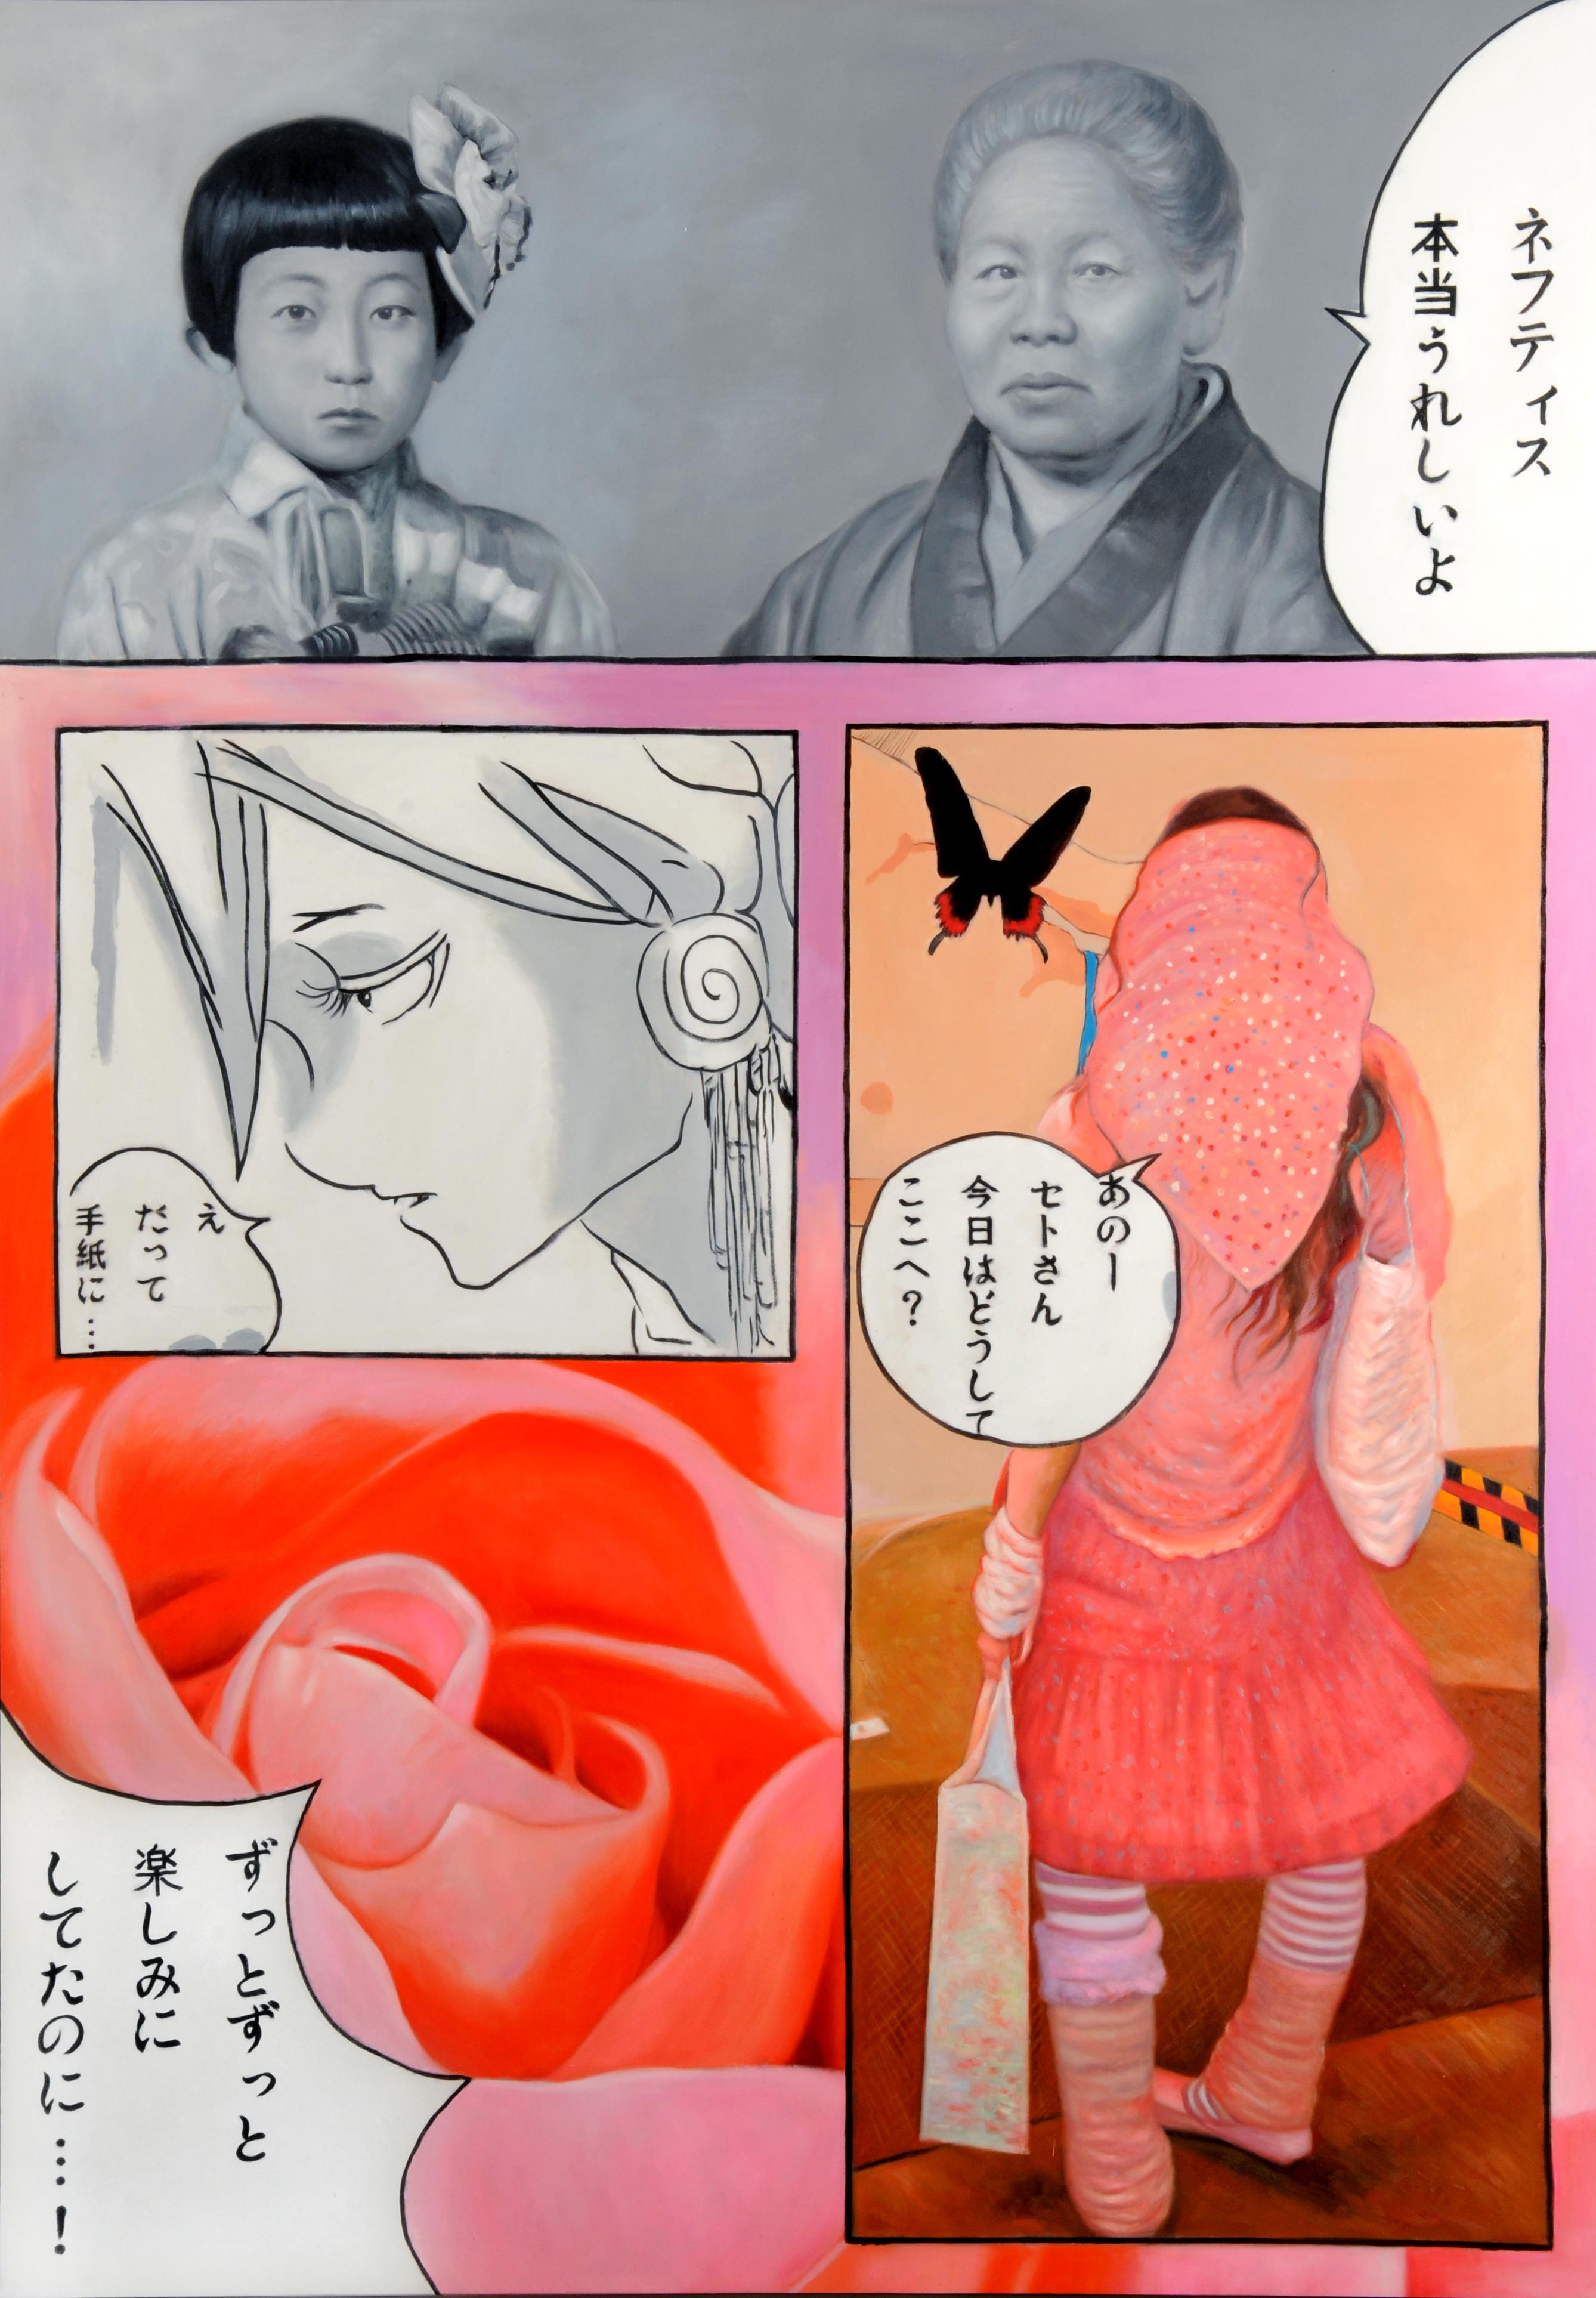 Kawai2 : Kawaii Konvergence, Tokyo's Dual Delights - Painting by JIMMY YOSHIMURA